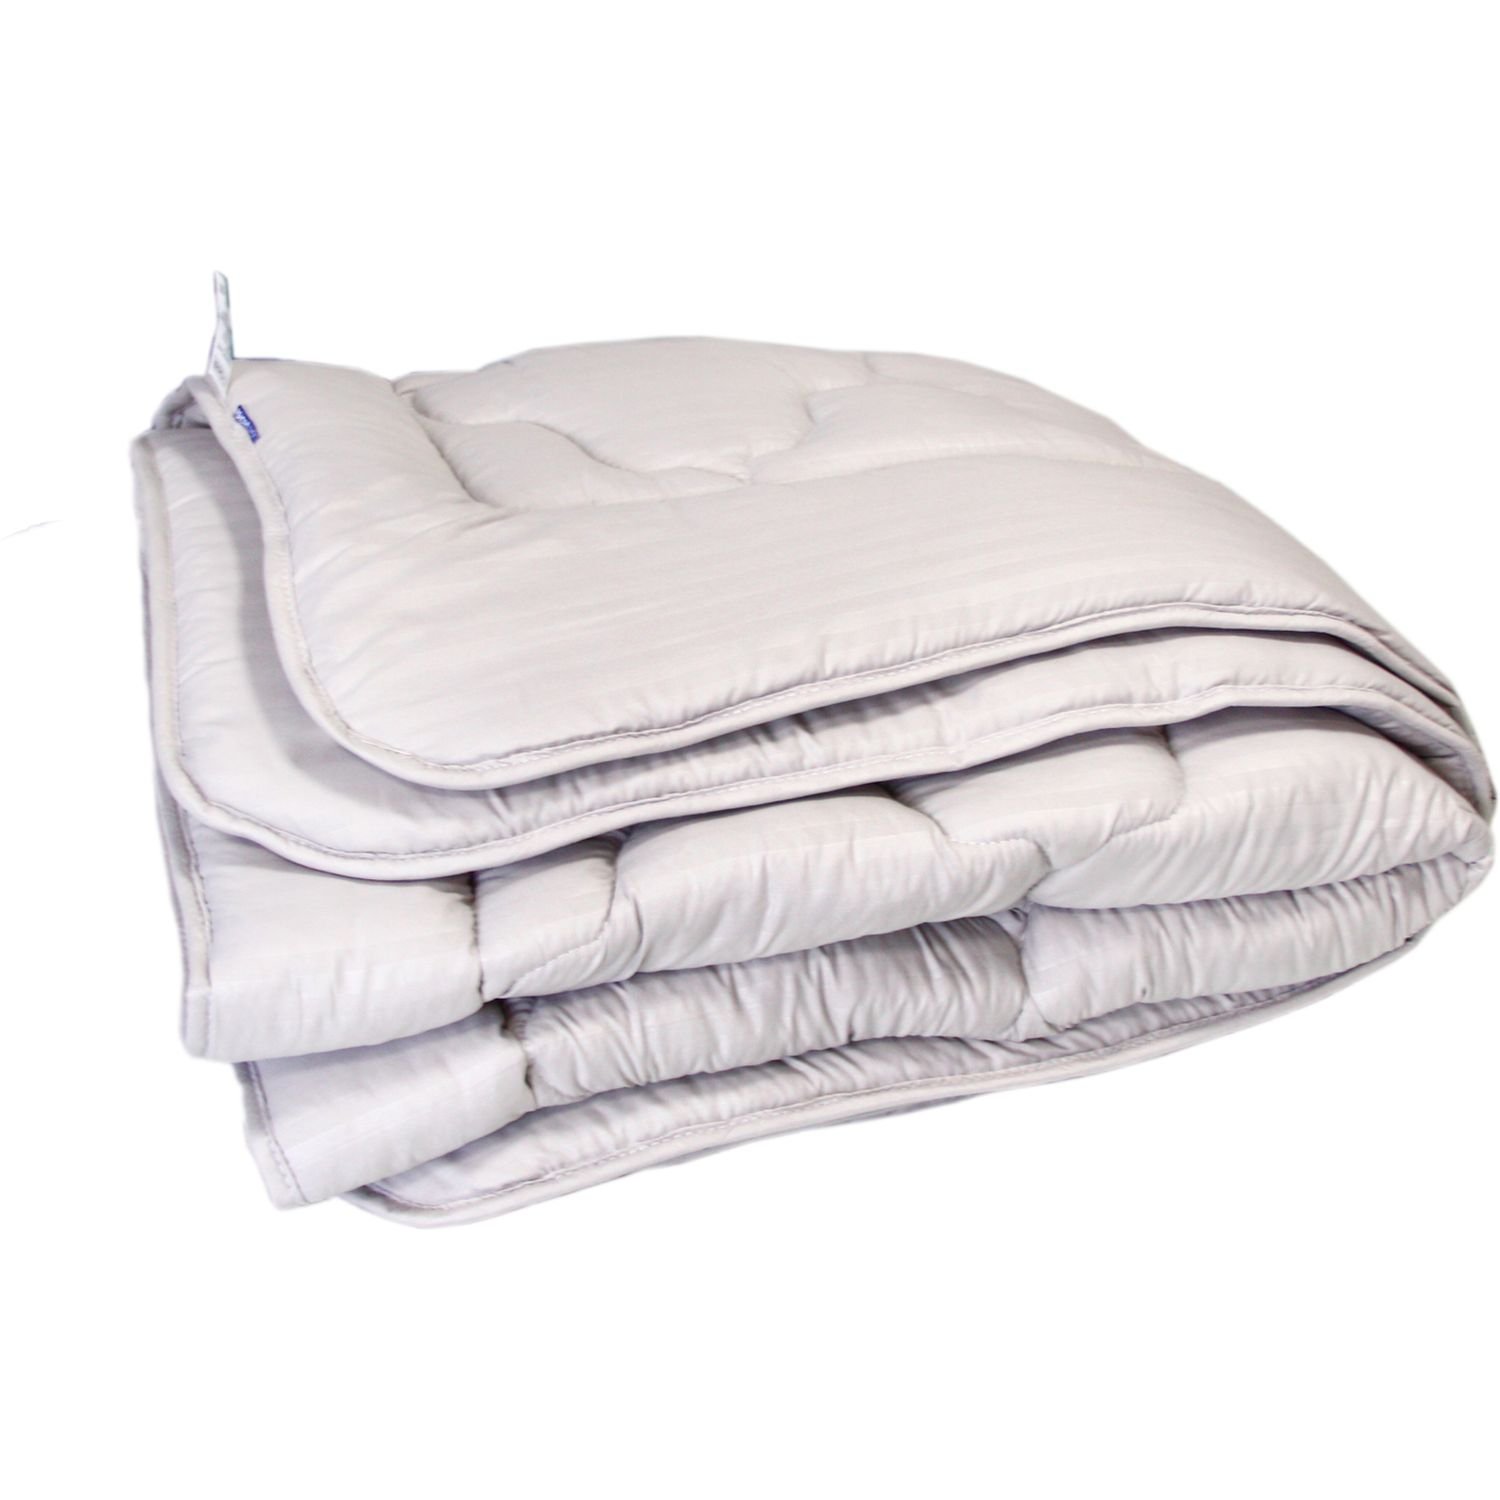 Одеяло LightHouse Soft Line Mf Stripe grey, 155х215 см, серое (602251) - фото 1